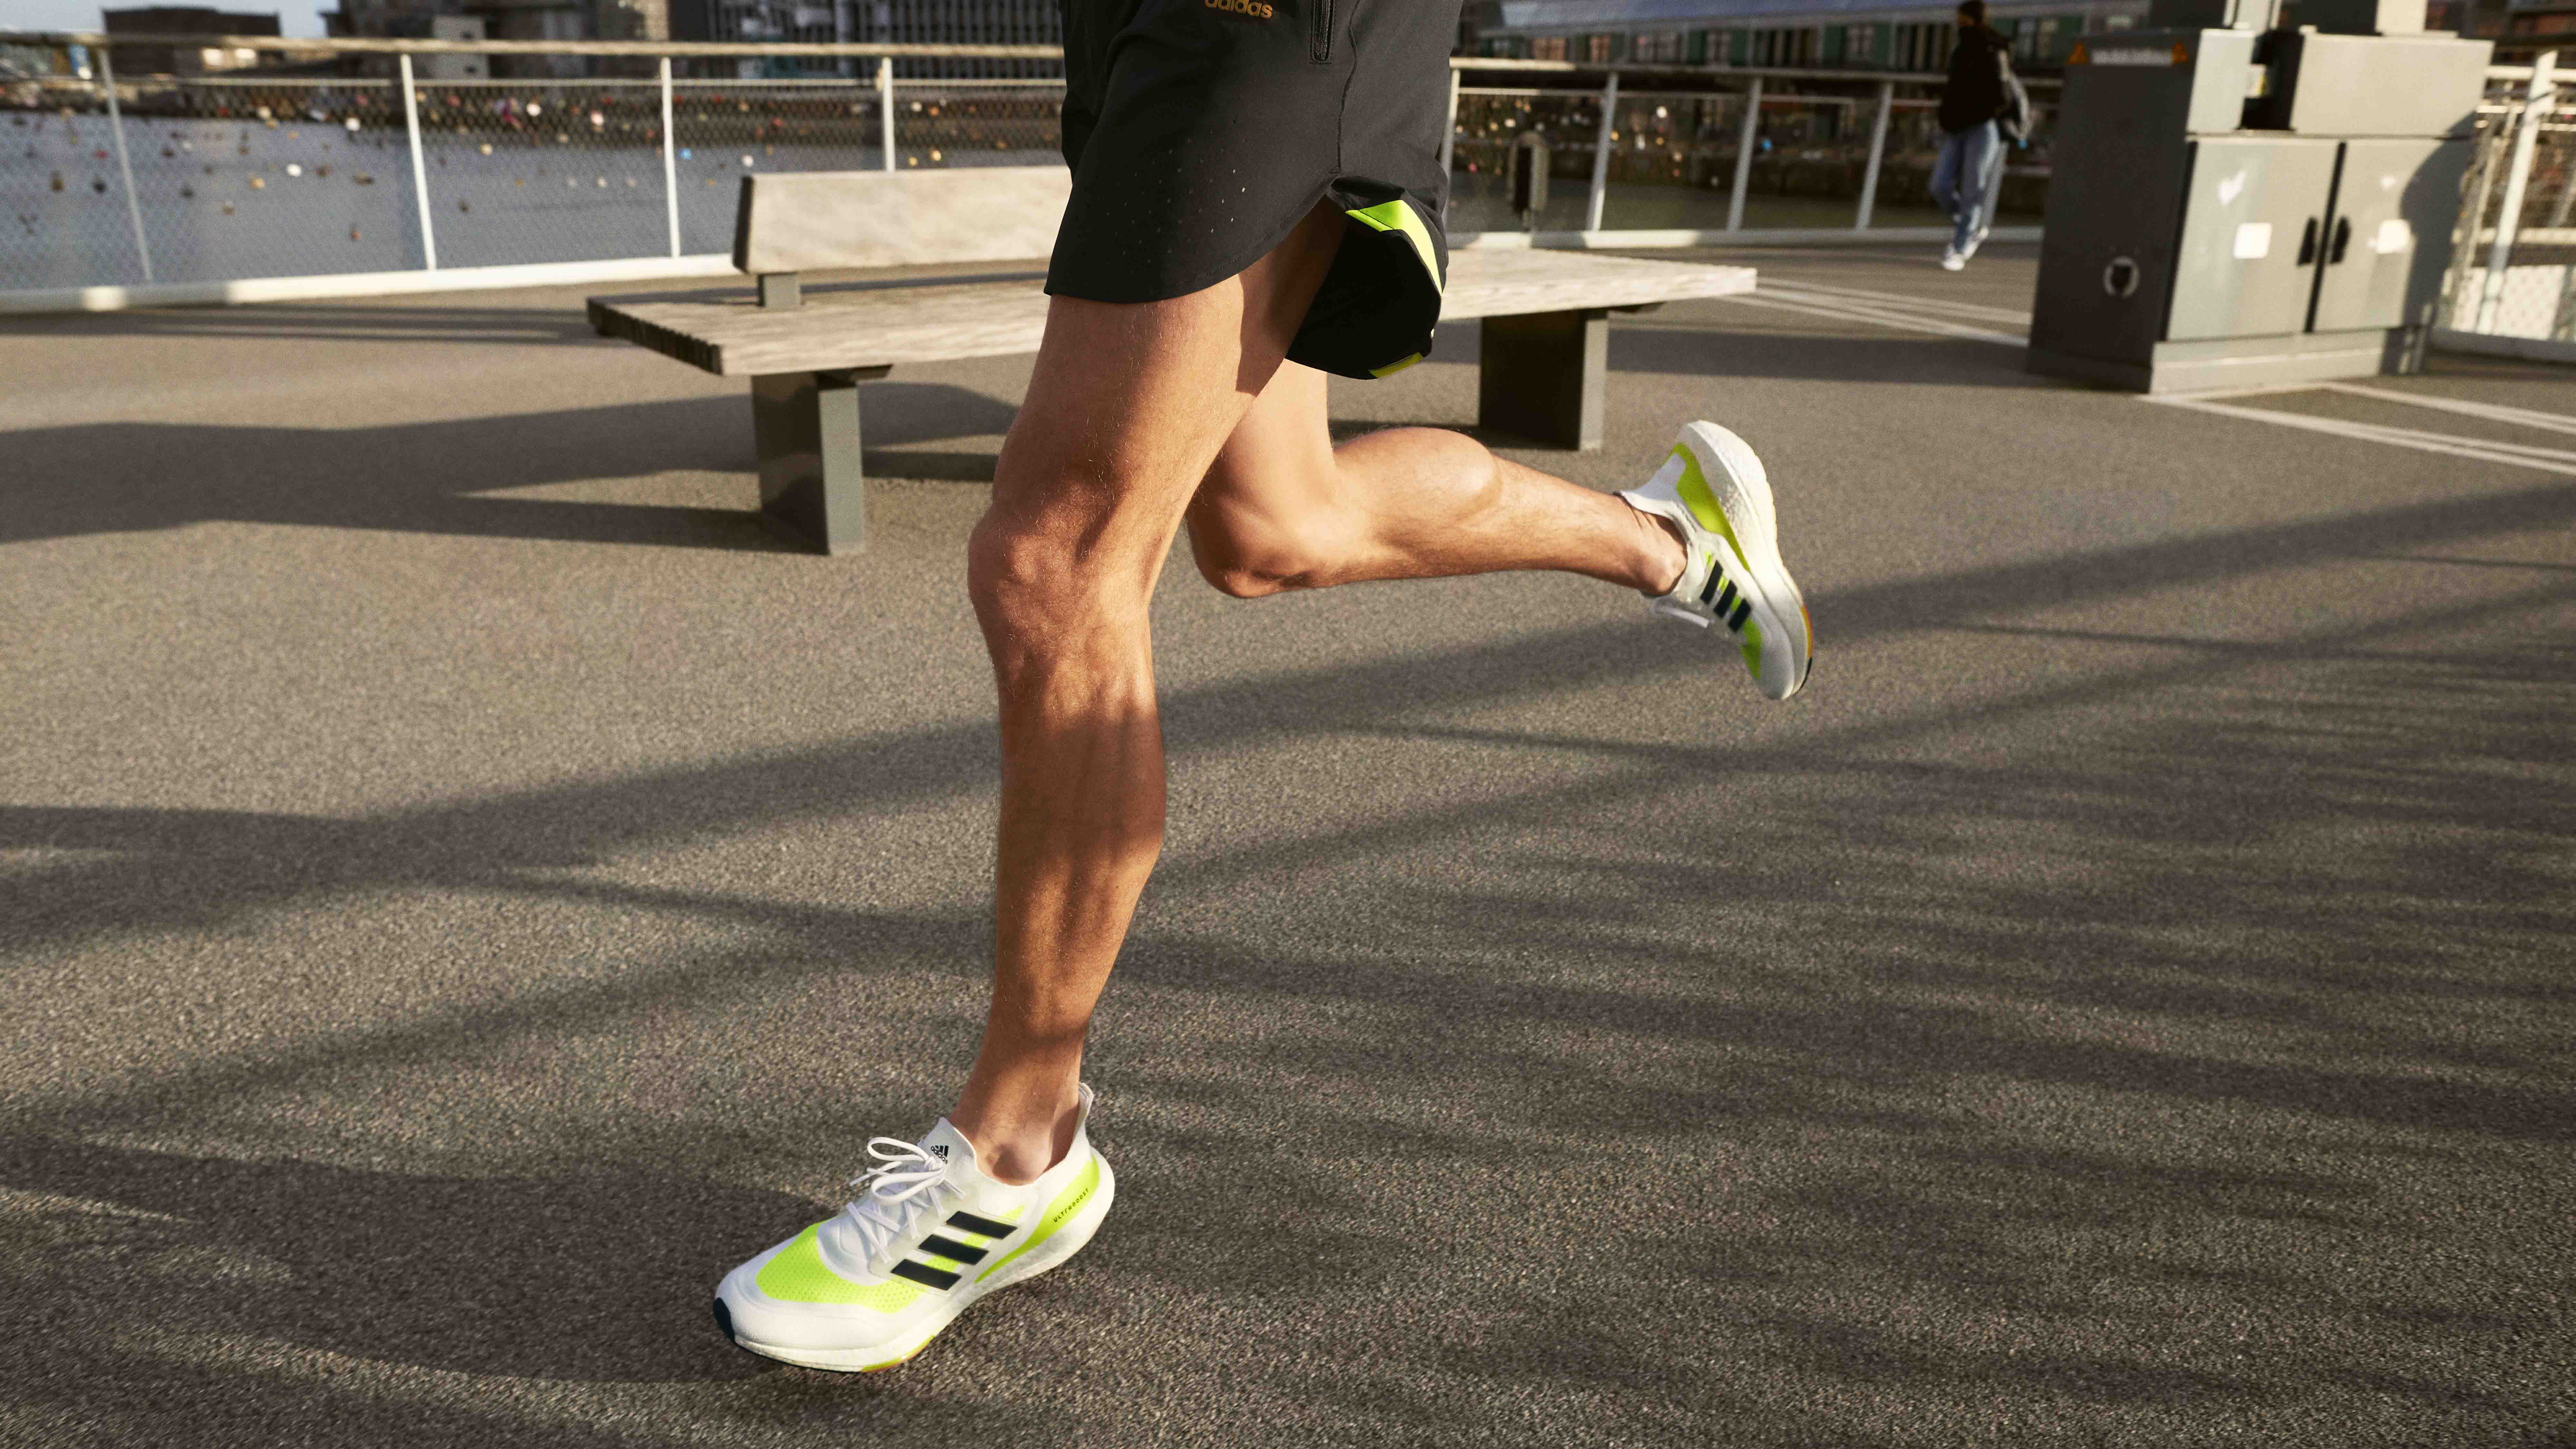 adidas vs brooks for running